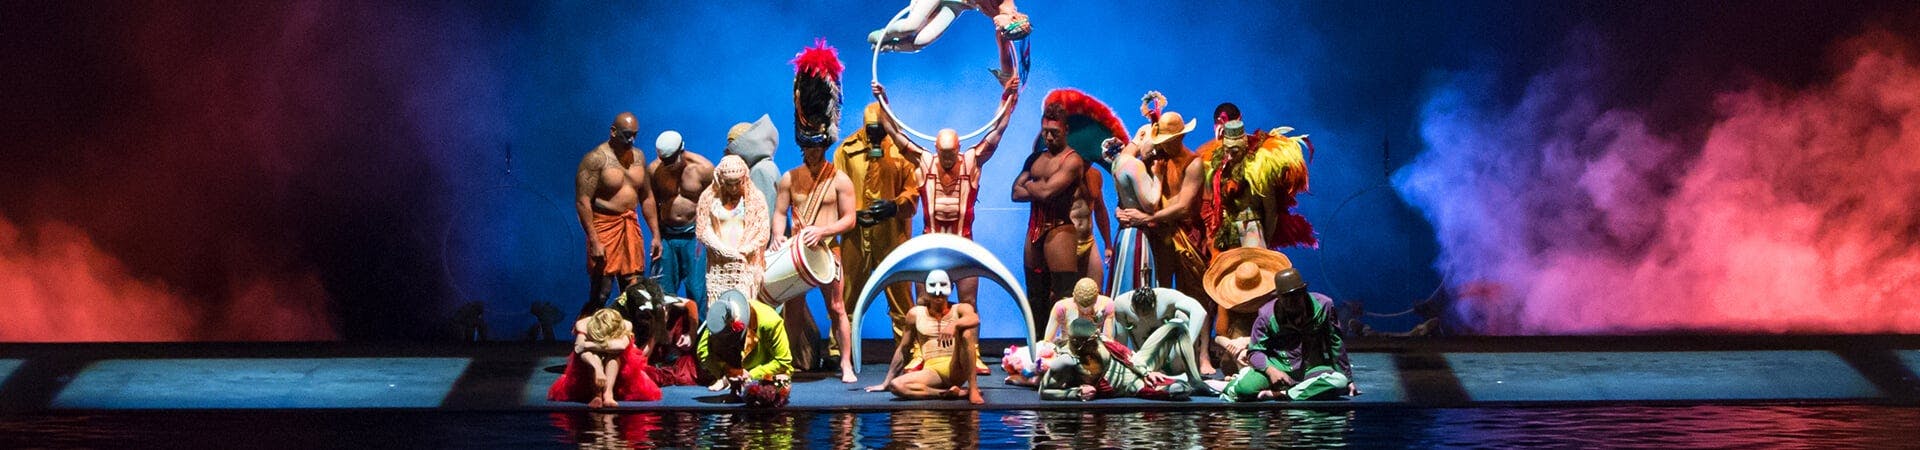 Entertainment: Cirque du Soleil Show at Bellagio